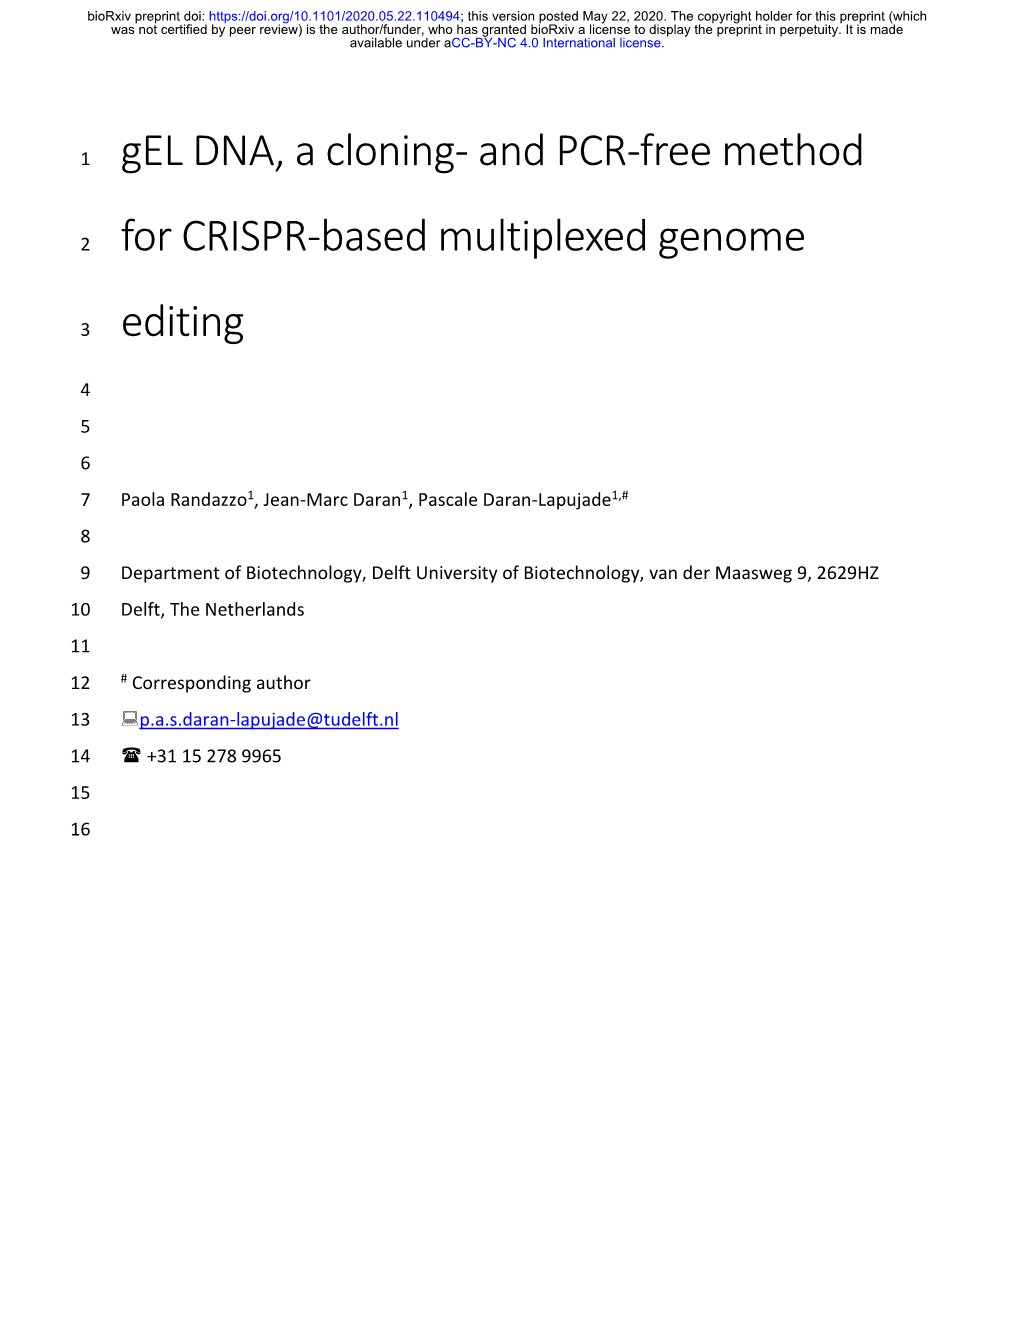 Gel DNA, a Cloning- and PCR-Free Method for CRISPR